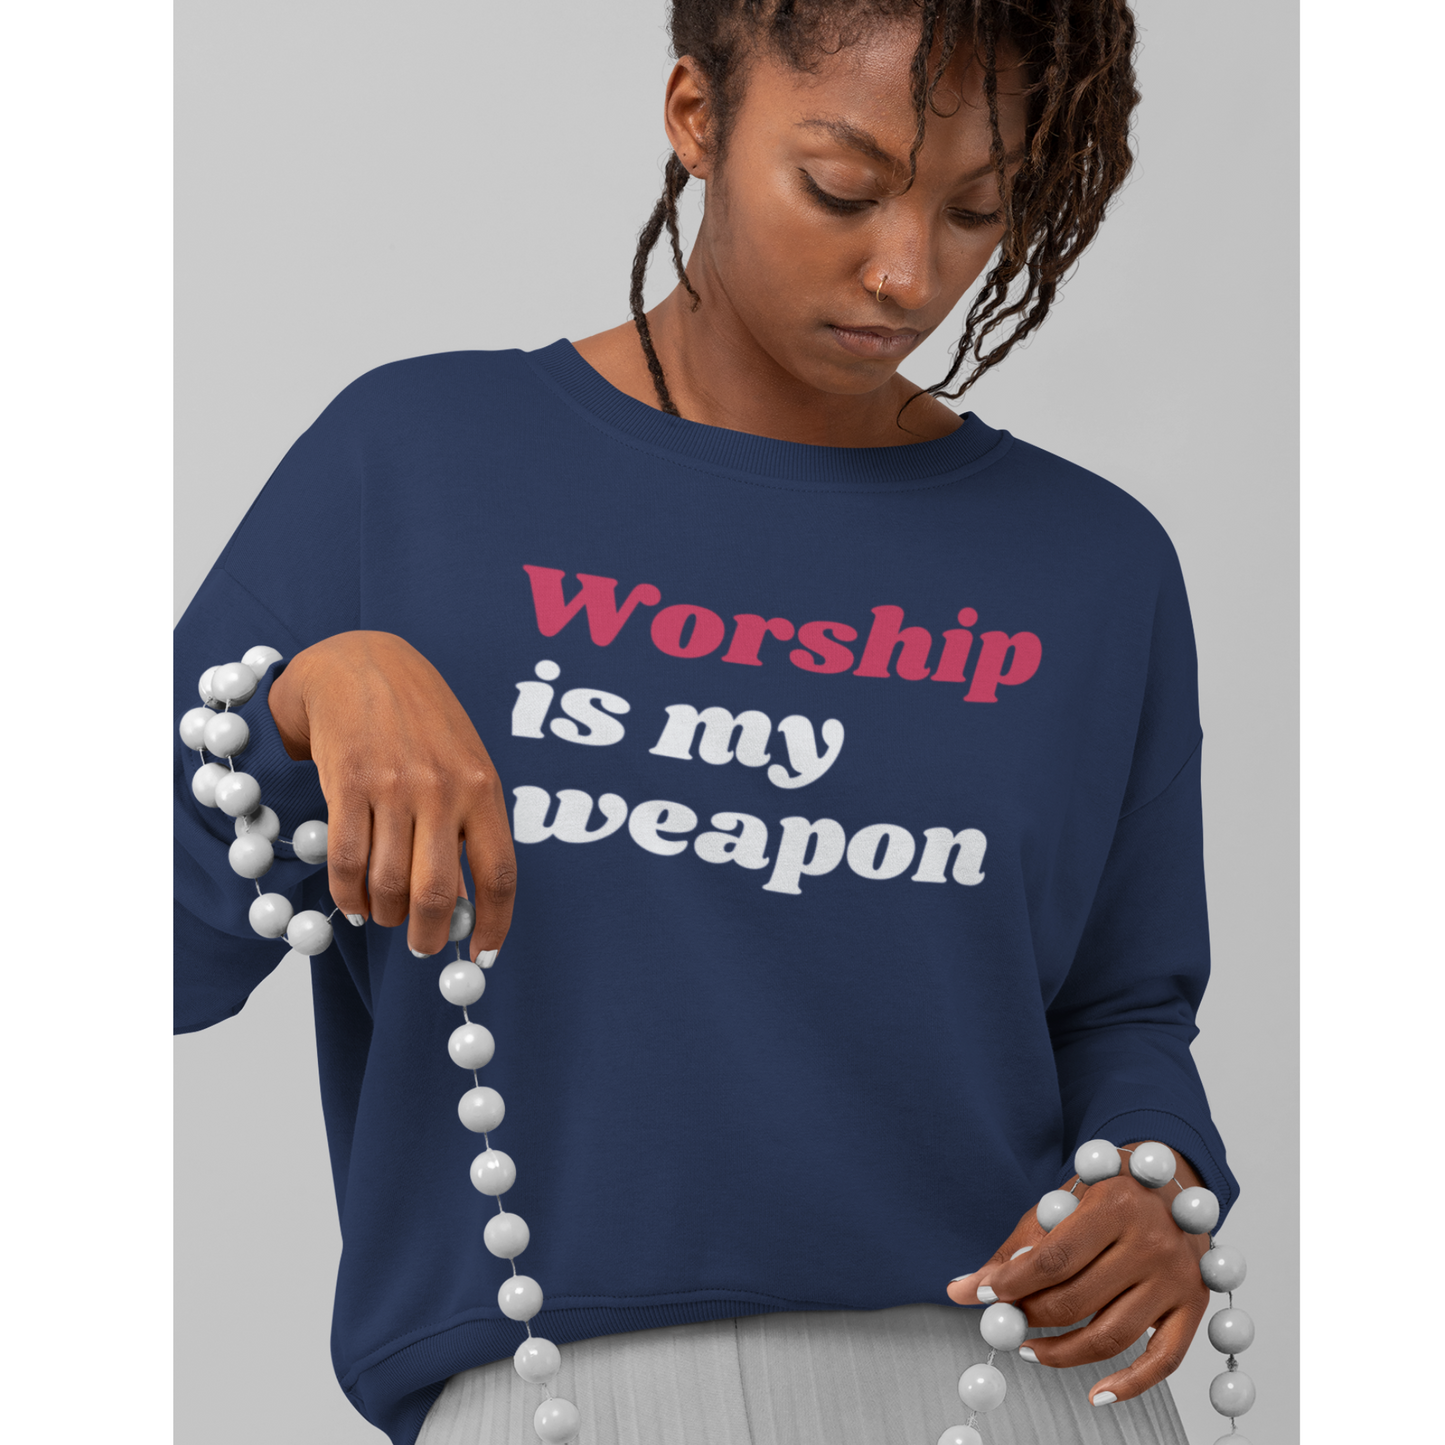 Worship God Sweatshirt, Christian Apparel, Faith Apparel